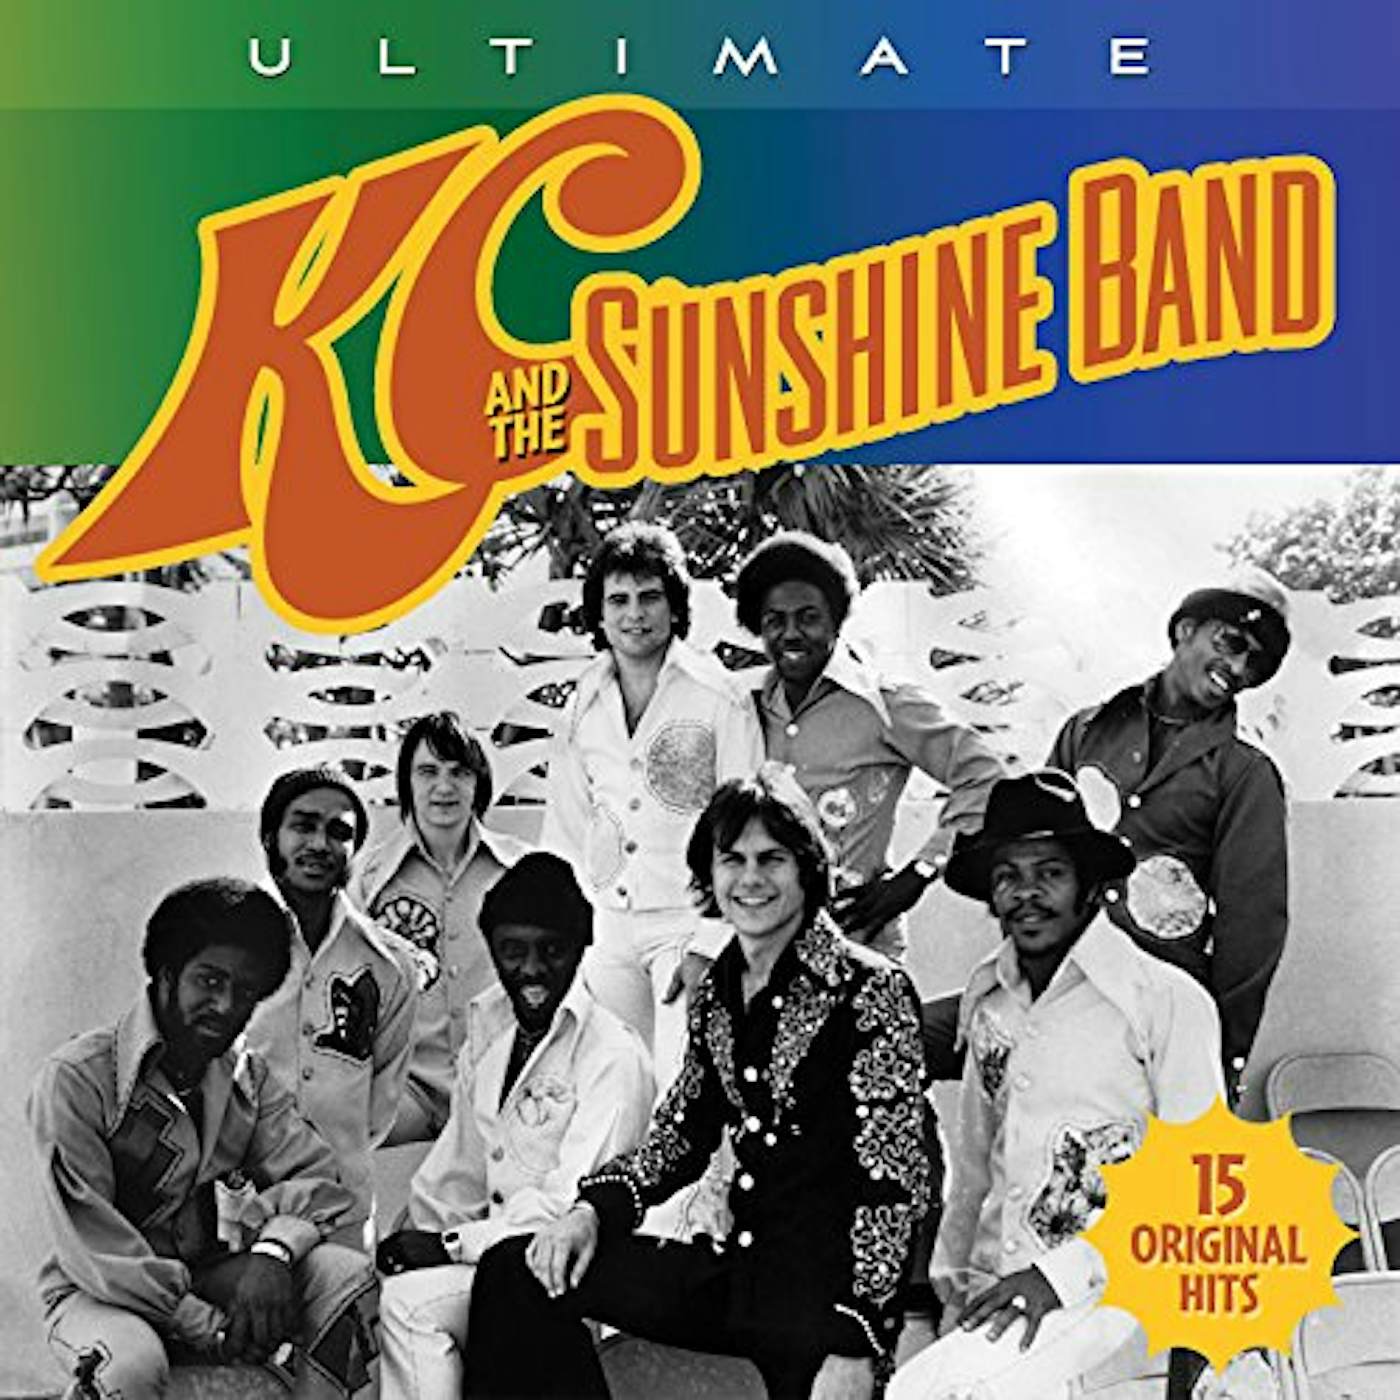 K.C. & SUNSHINE BAND ULTIMATE KC & THE SUNSHINE BAND: 15 ORIGINAL HITS CD